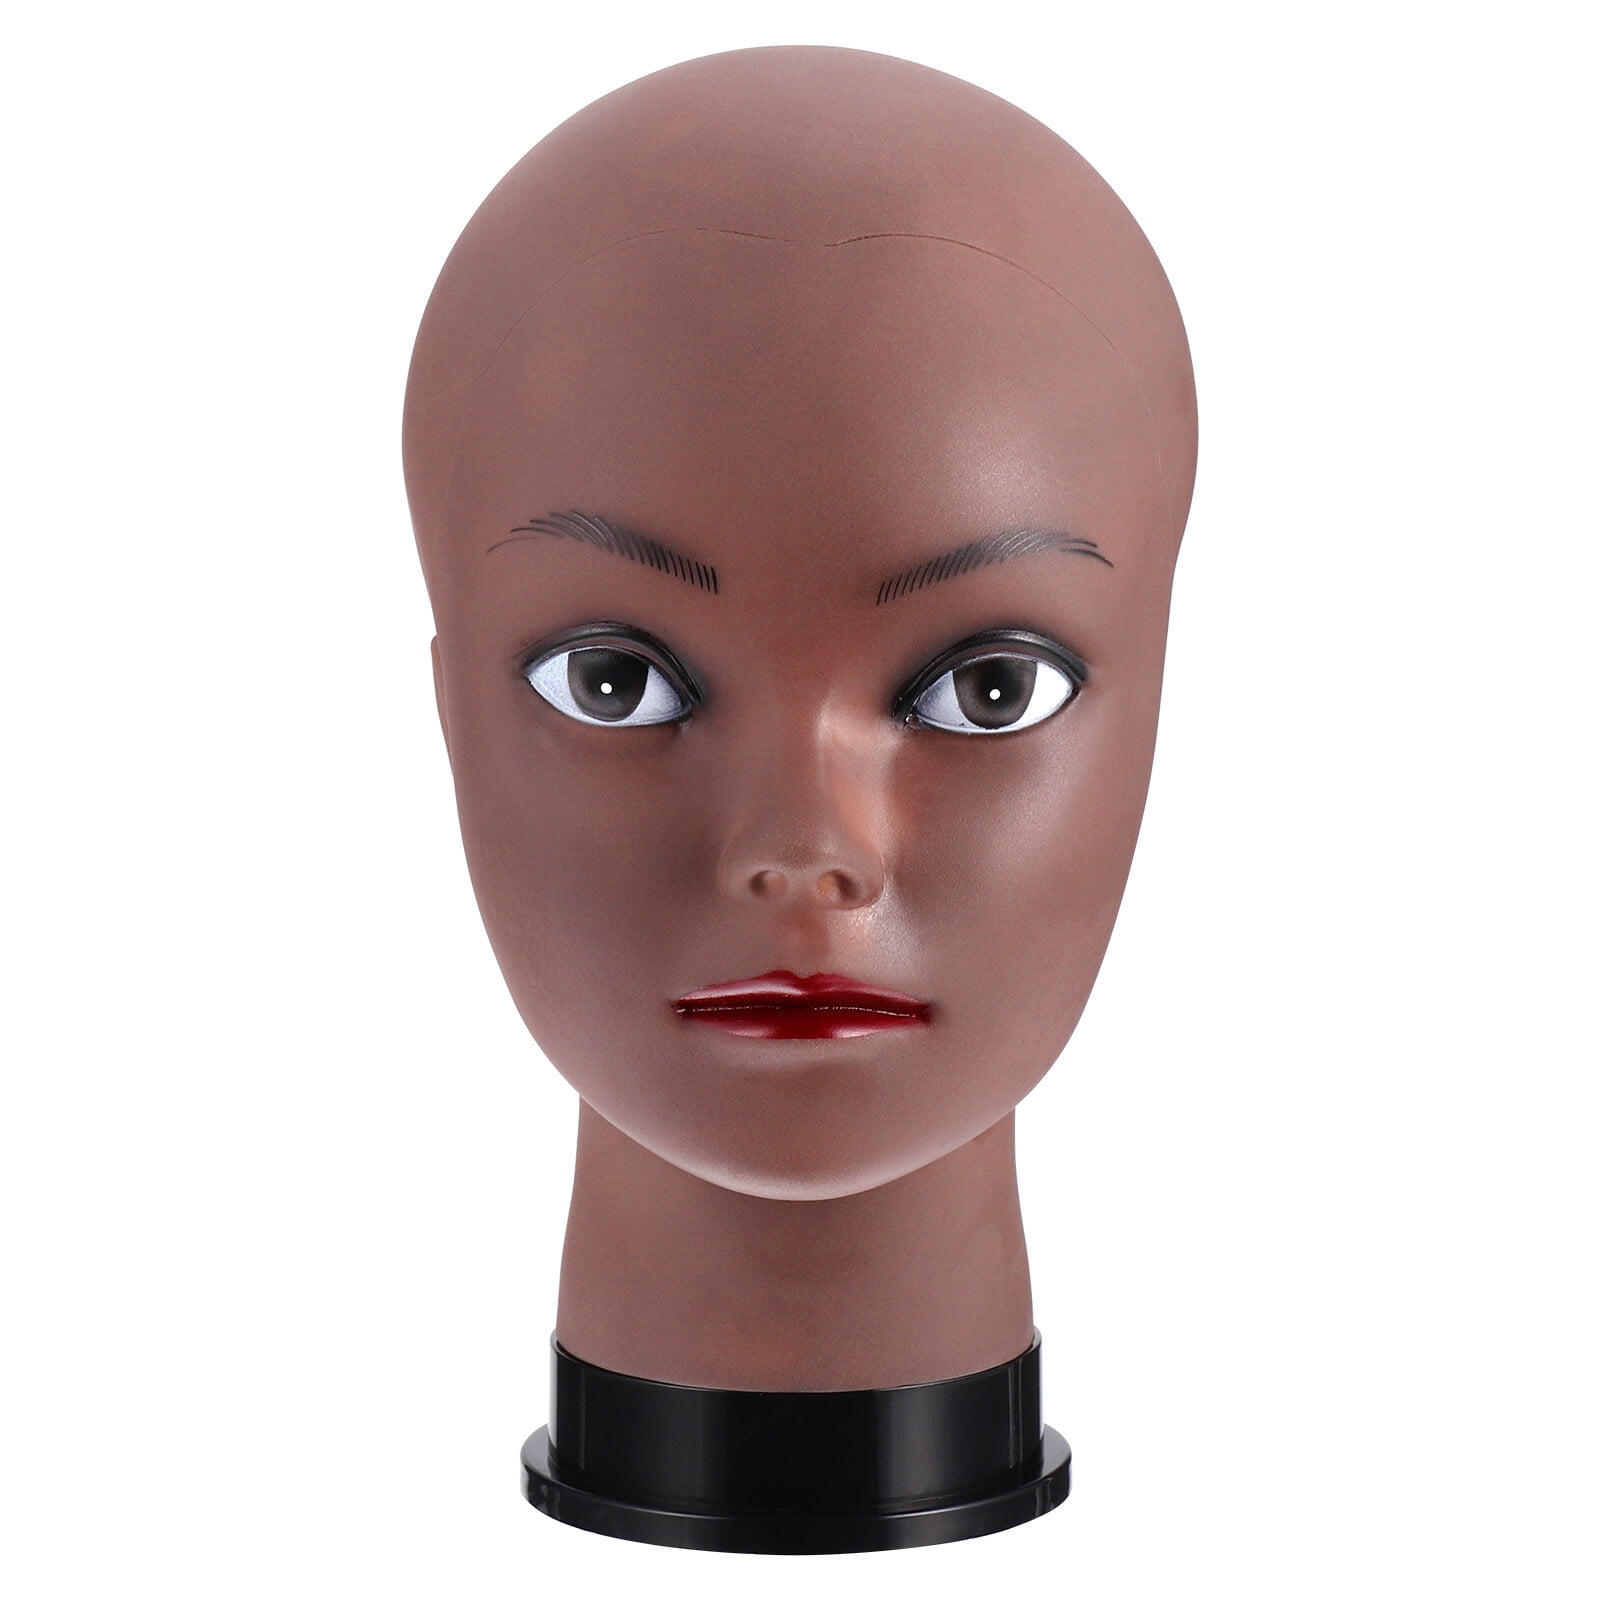 Wefts, Bald Headed Mannequins, Beauty School Supplies